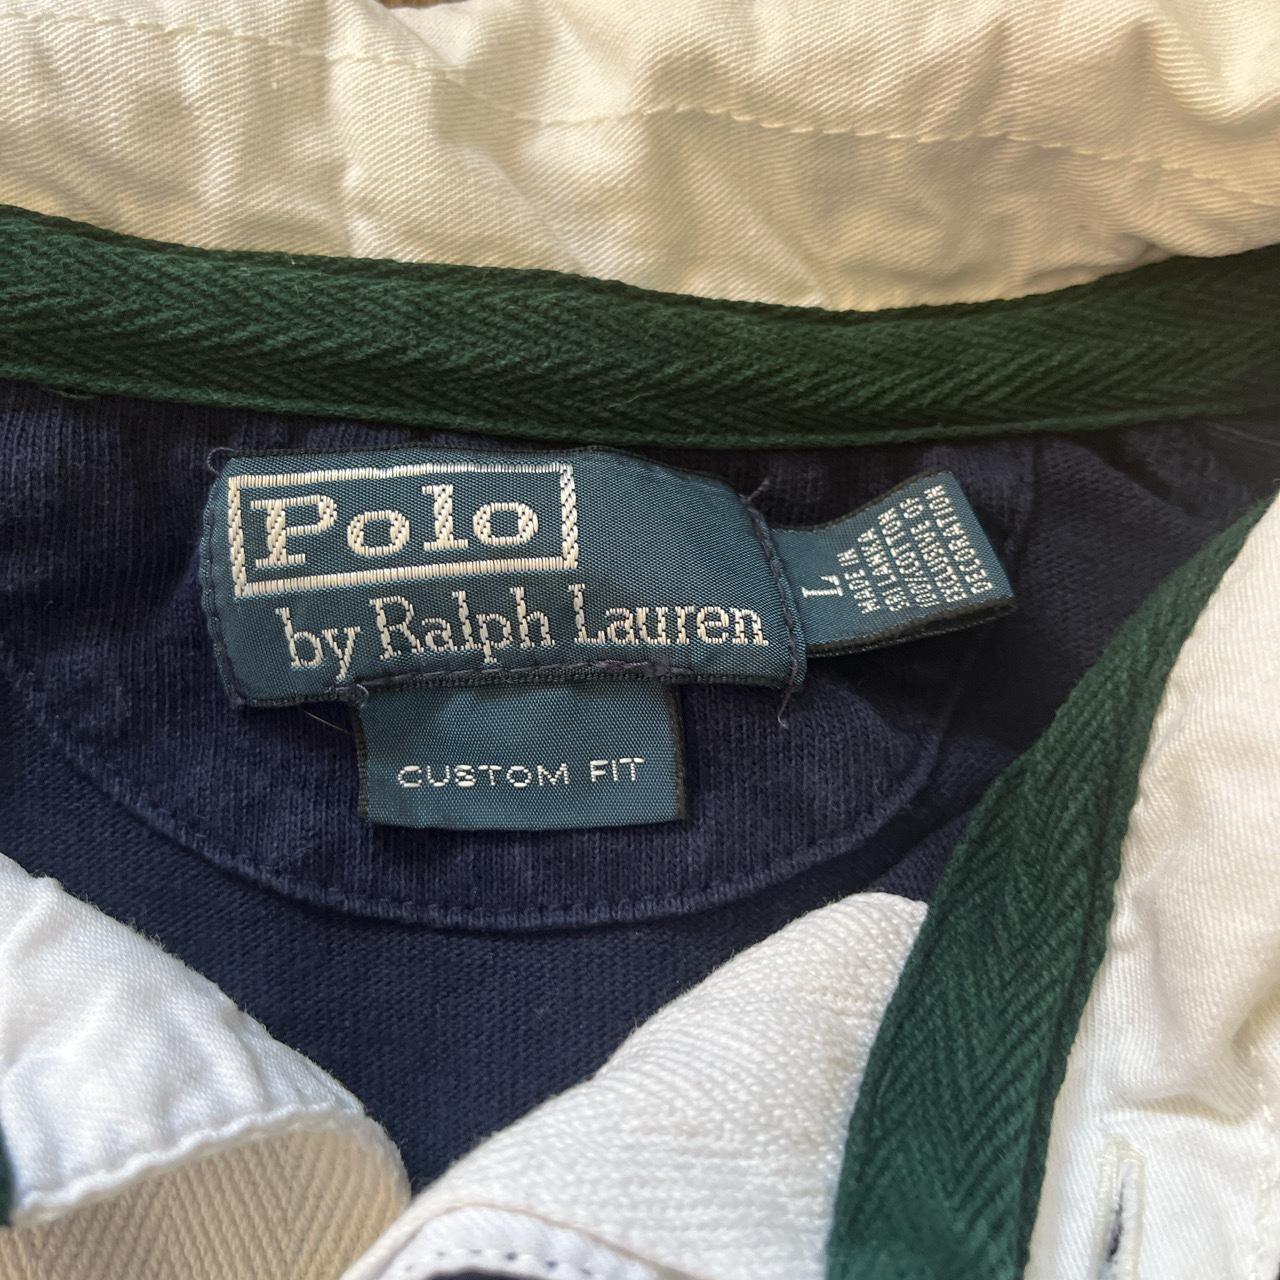 Vintage Ralph Lauren polo shirt / rugby shirt size... - Depop